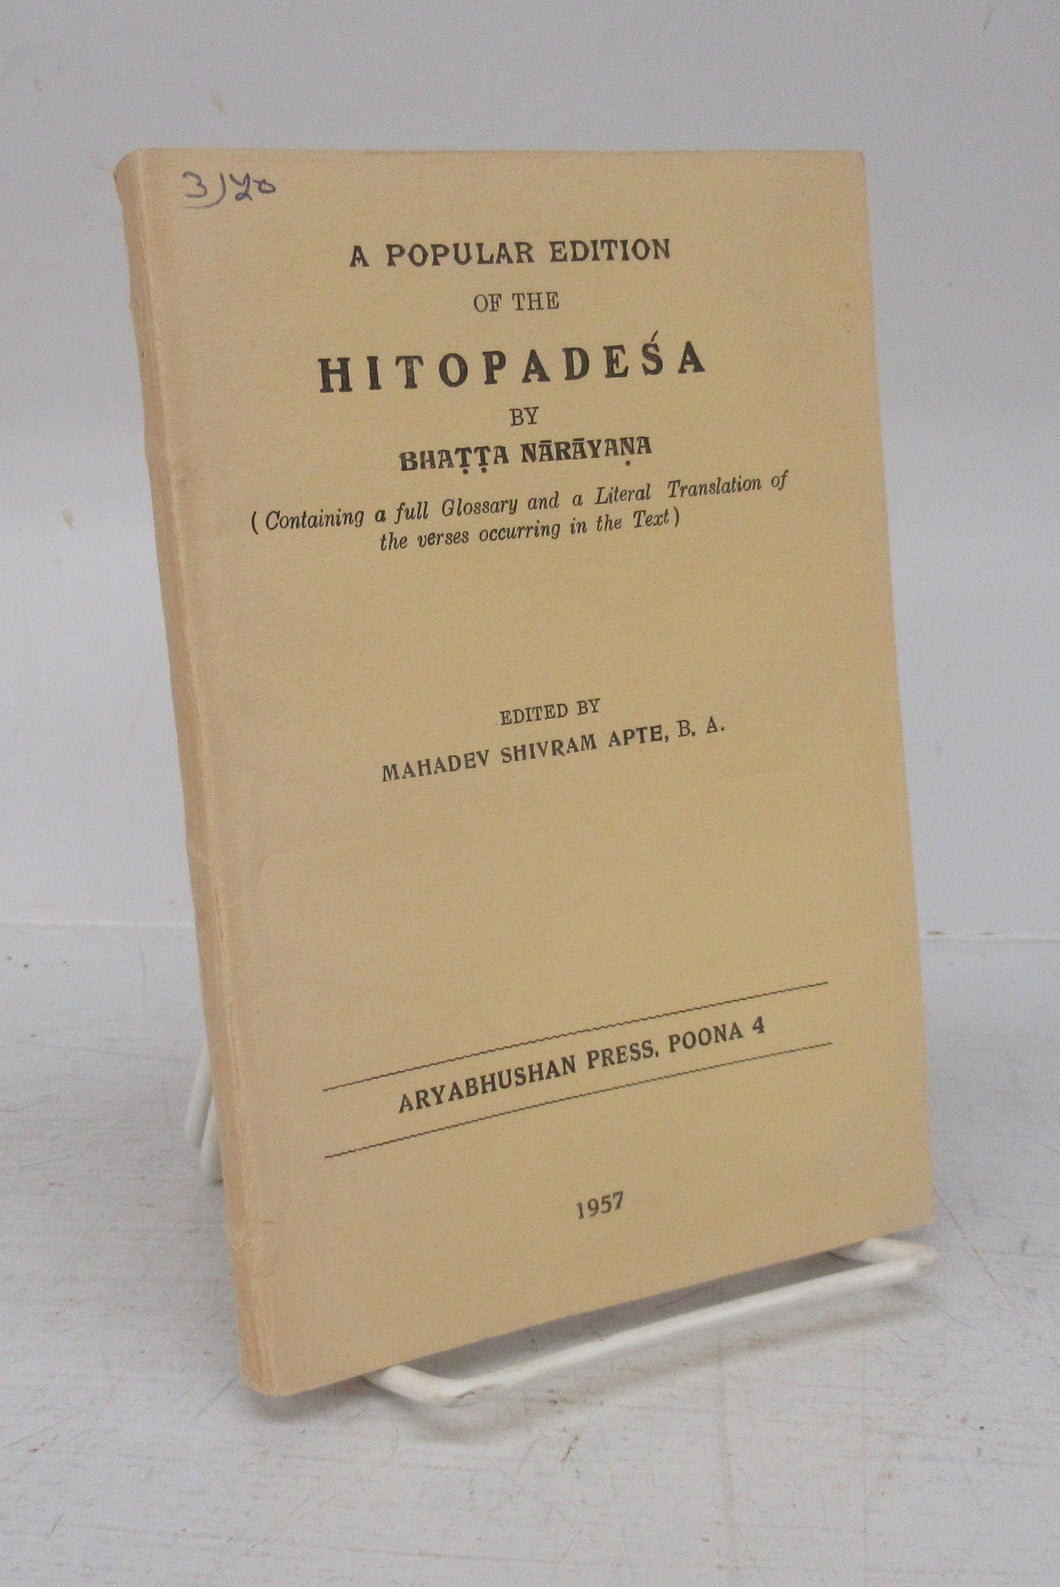 A Popular Edition of the Hitopadesa